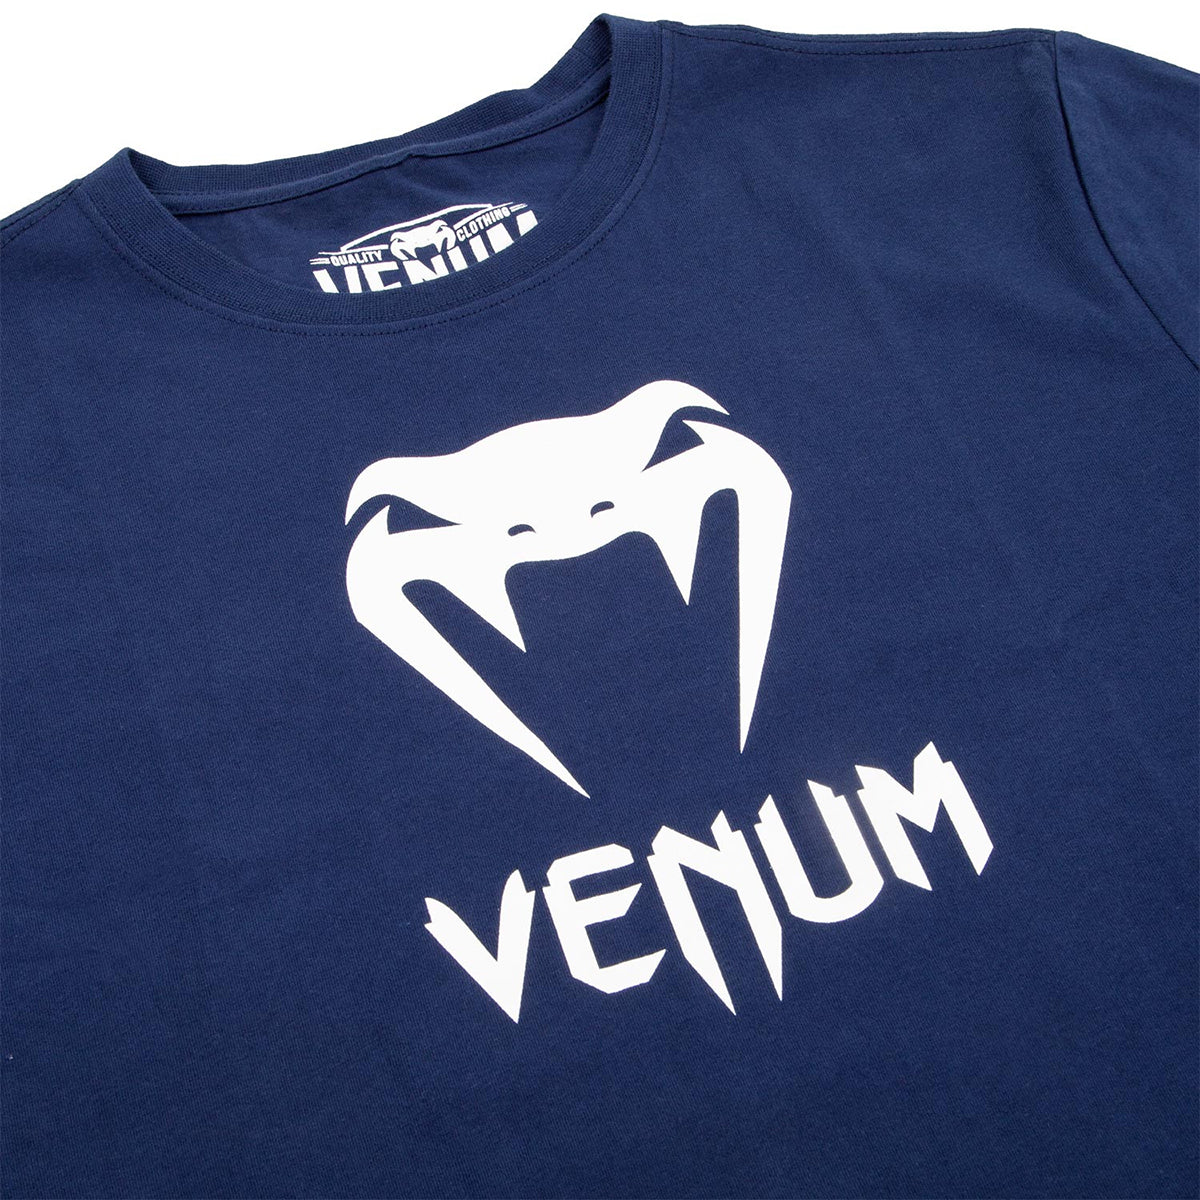 Venum Classic Short Sleeve T-Shirt Venum